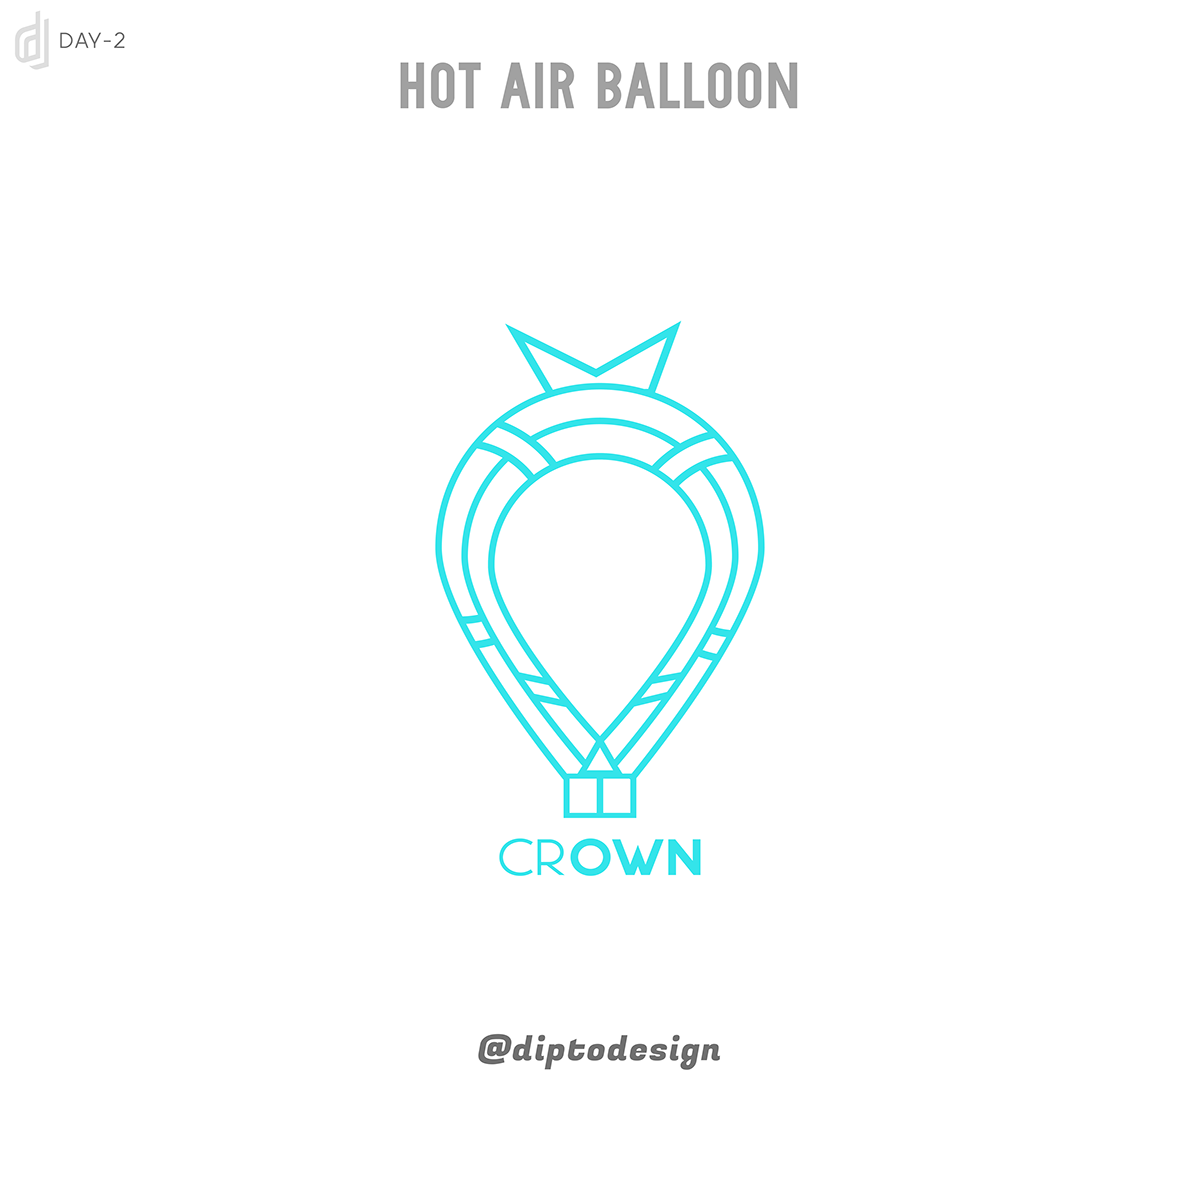 Crown hot air balloon logo on daily logo challenge